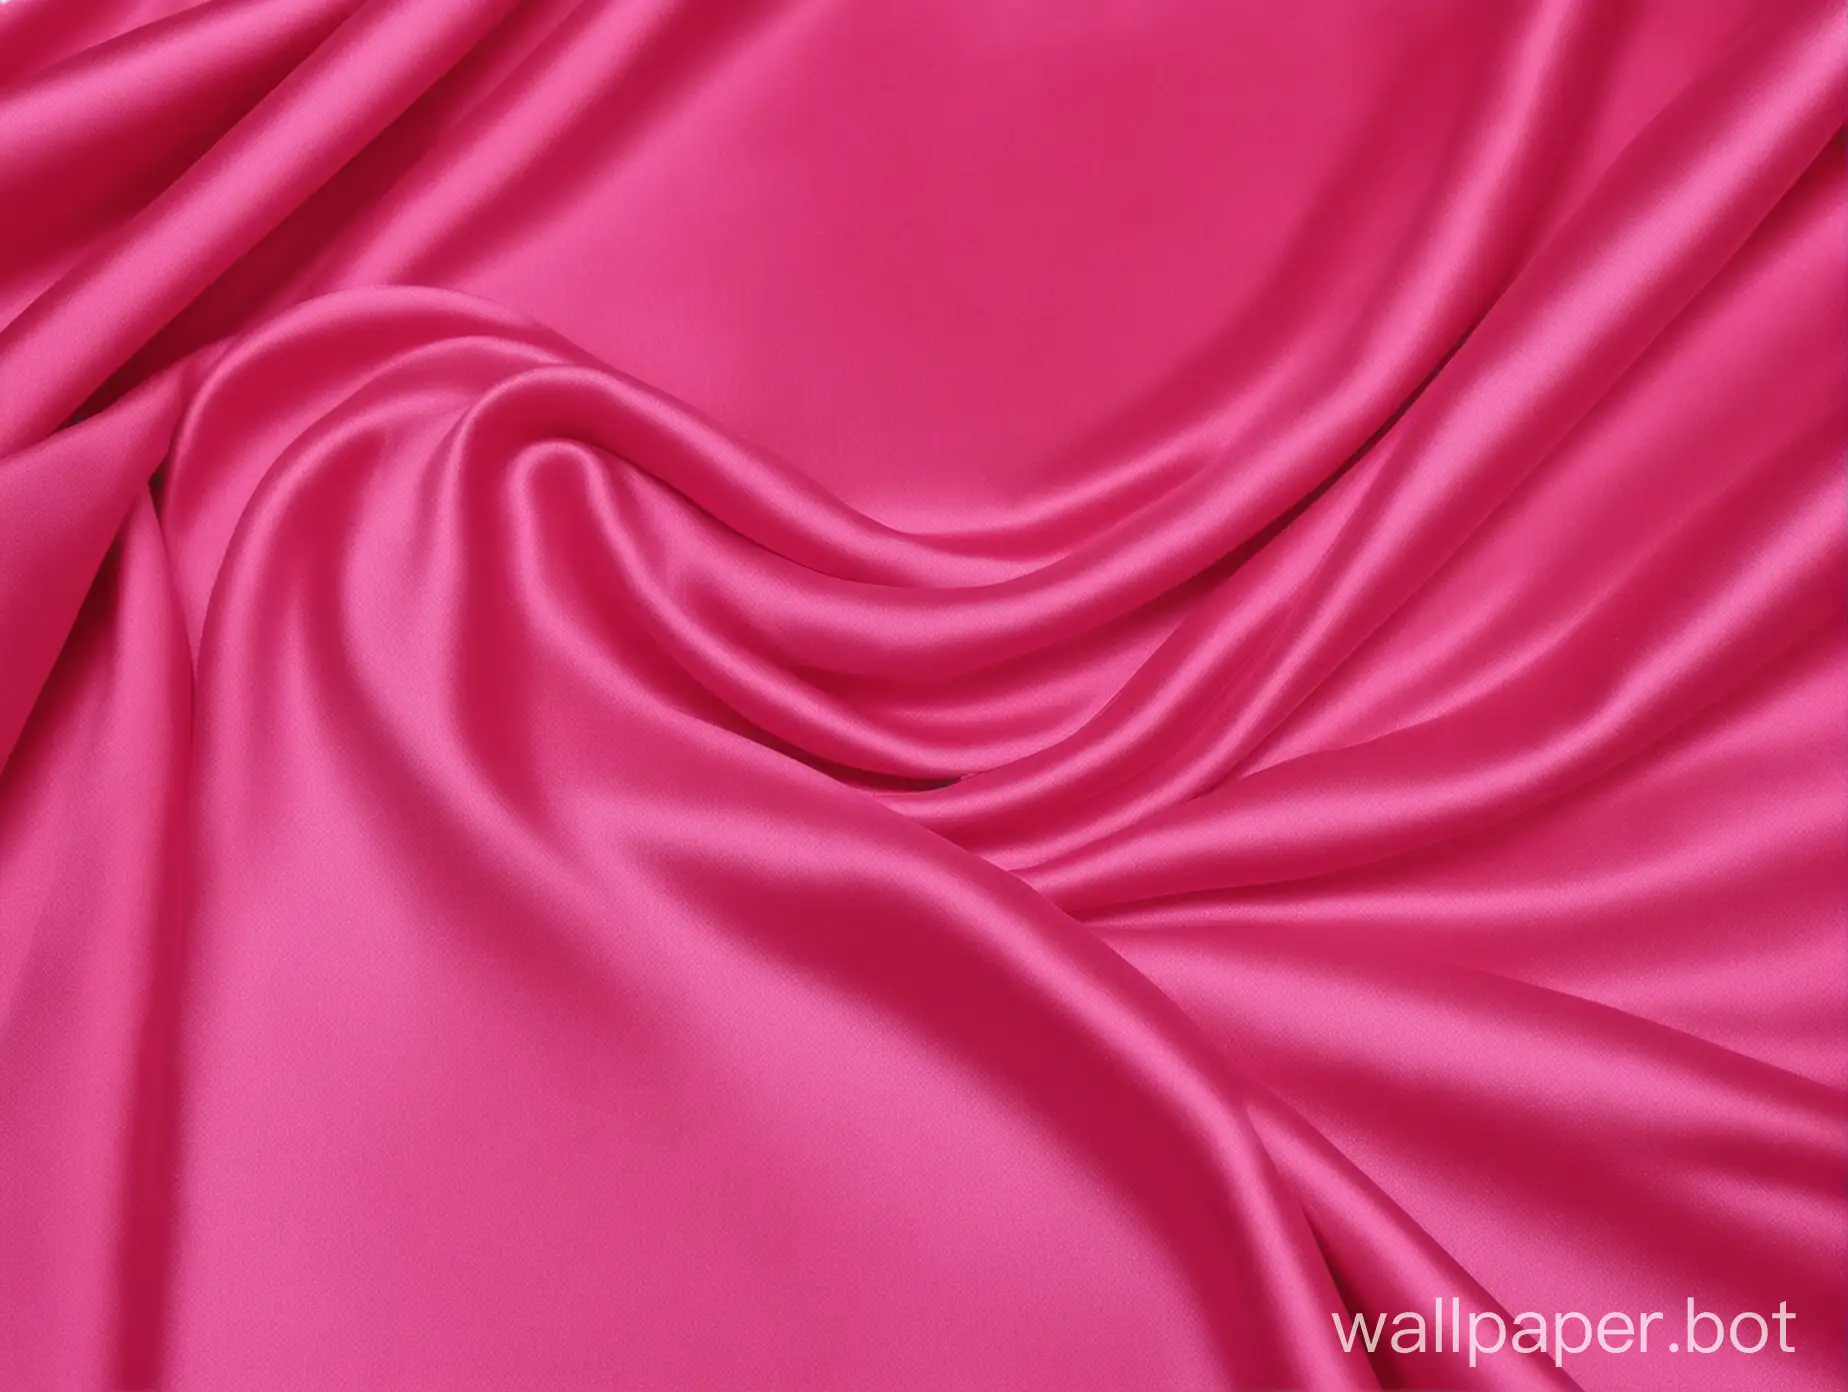 luxurious, gentle hot pink fuchsia liquid mulberry silk charmeuse fabric fetish